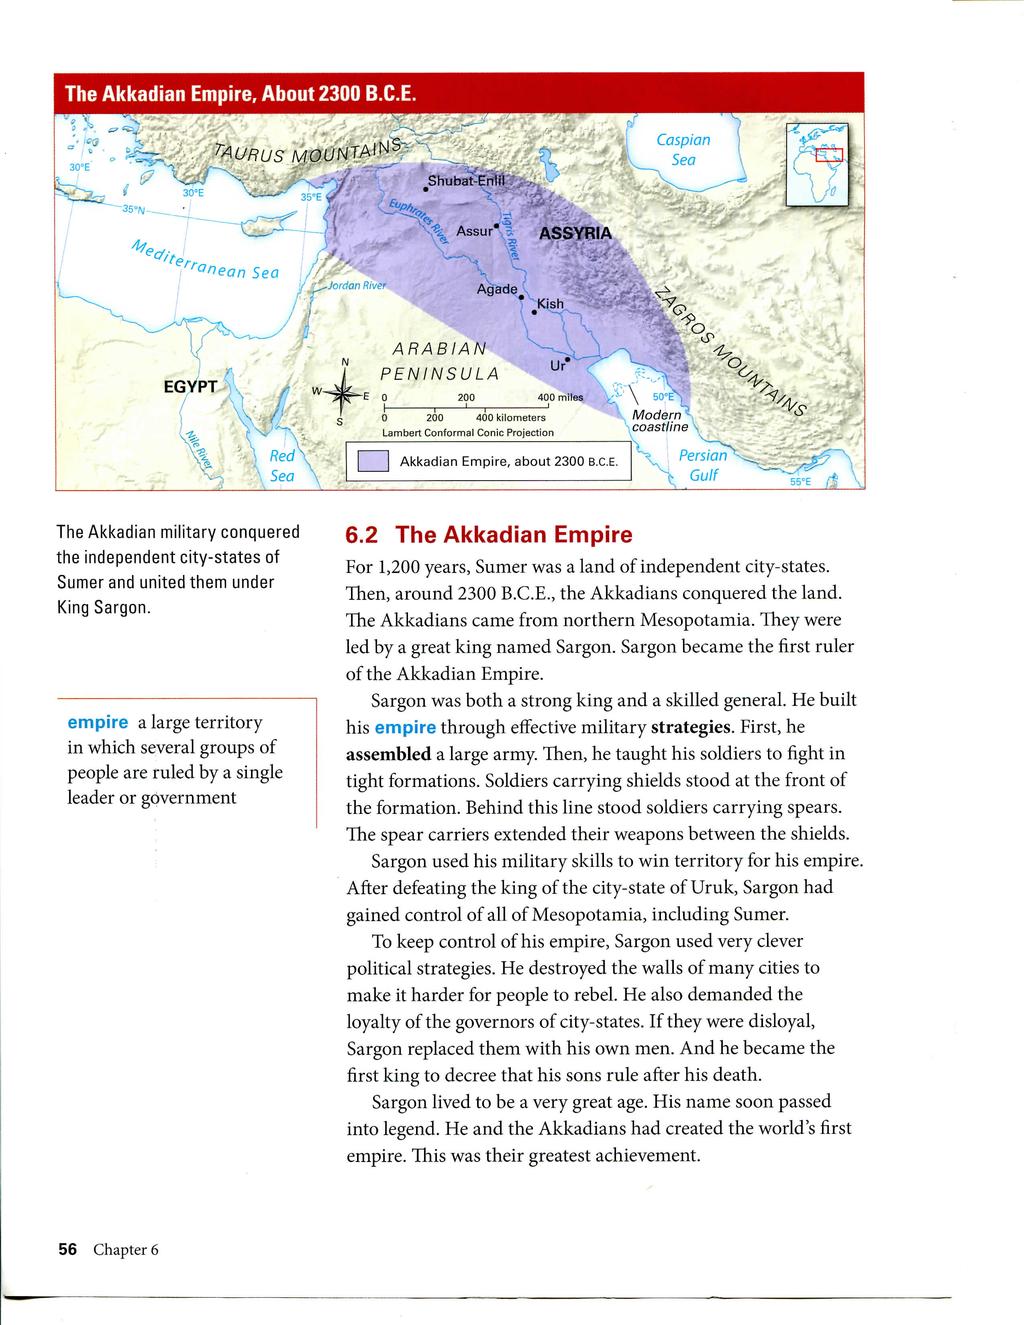 The Akkadian Empire, About 2300 B.C.E. ^ I Shubat-Enlil 't\ Sea % Assur'l ASSYRIA y V-^ ^.